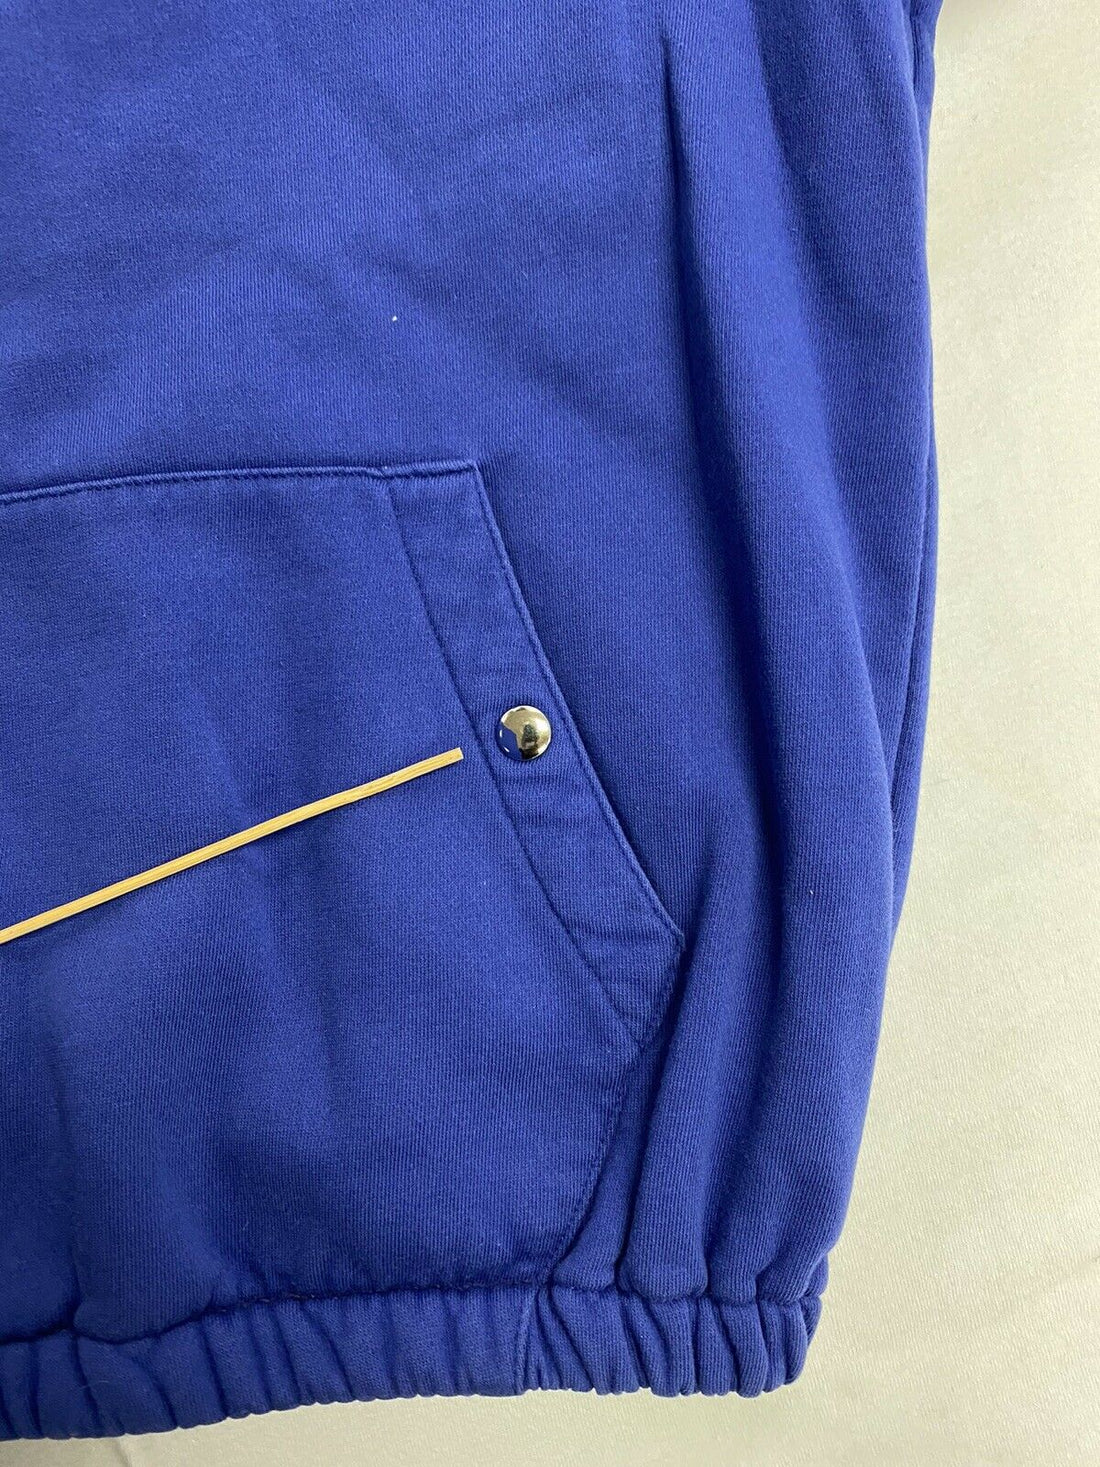 Vintage Polo Ralph Lauren Cross Flags Harrington Jacket Size Medium Blue 90s